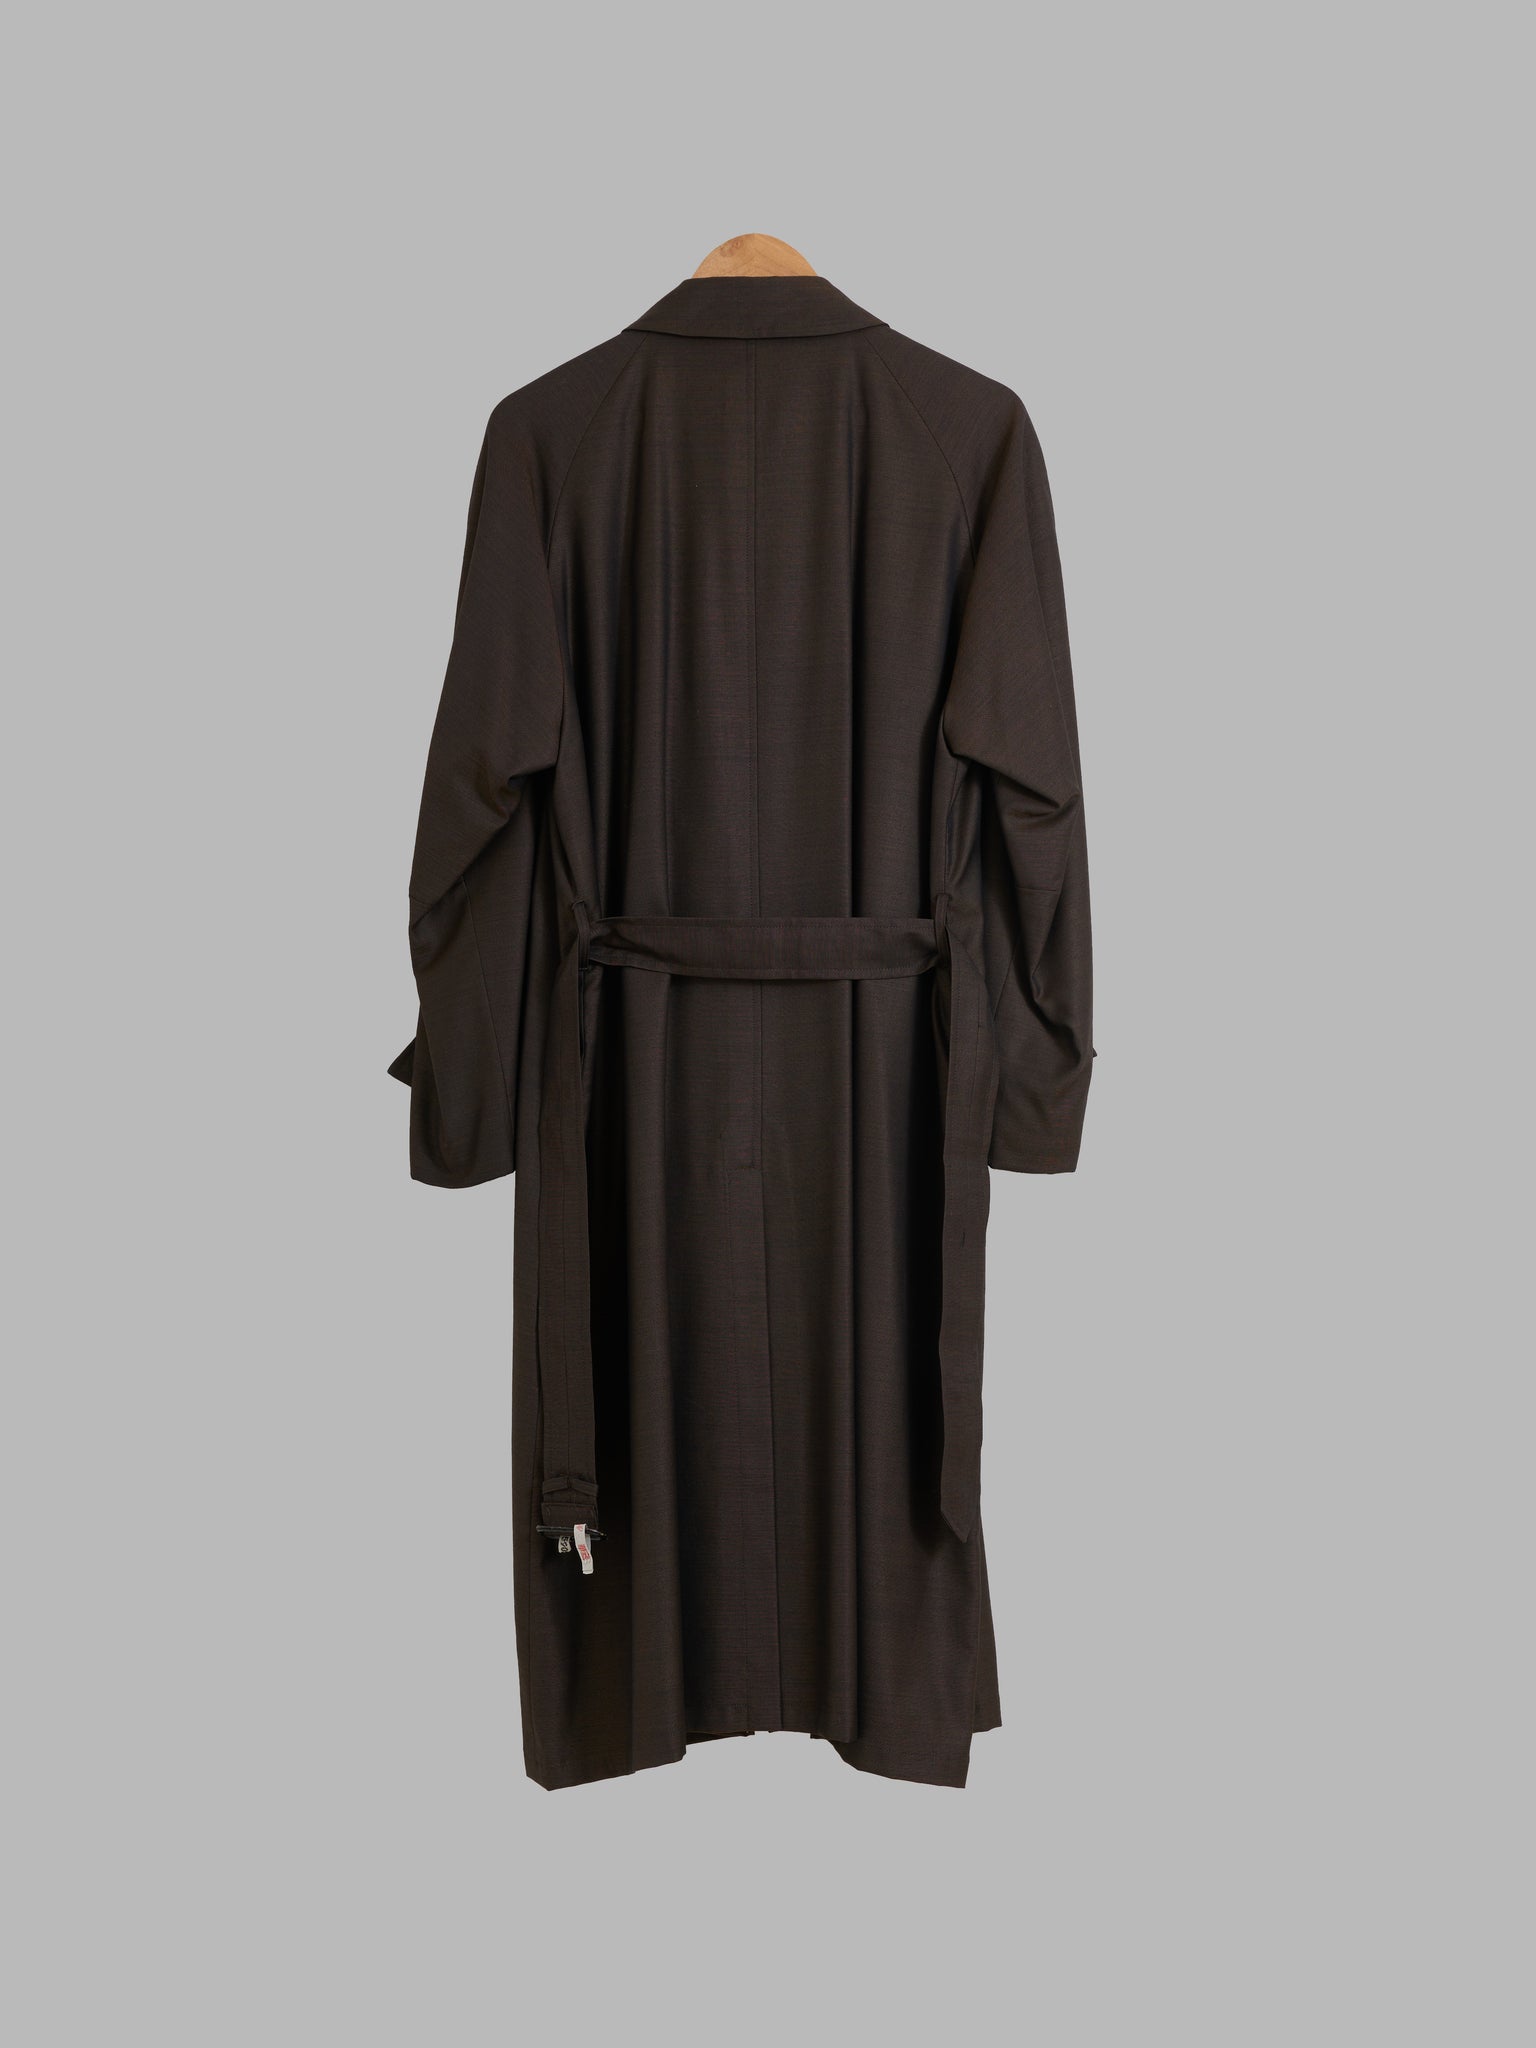 Grass men’s 1980s brown wool silk covered placket mackintosh coat - M L